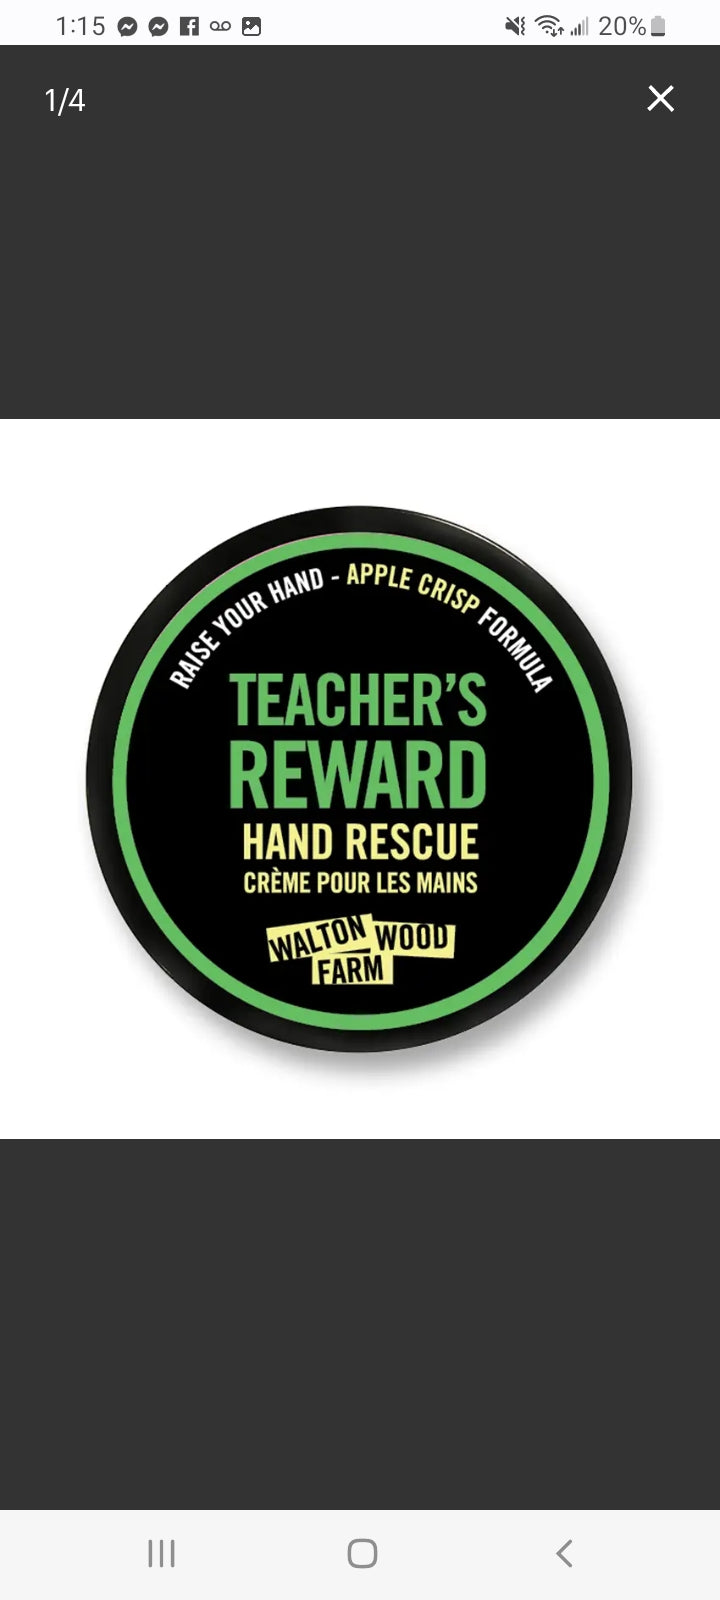 Walton Woods teacher's reward hand rescue apple crisp